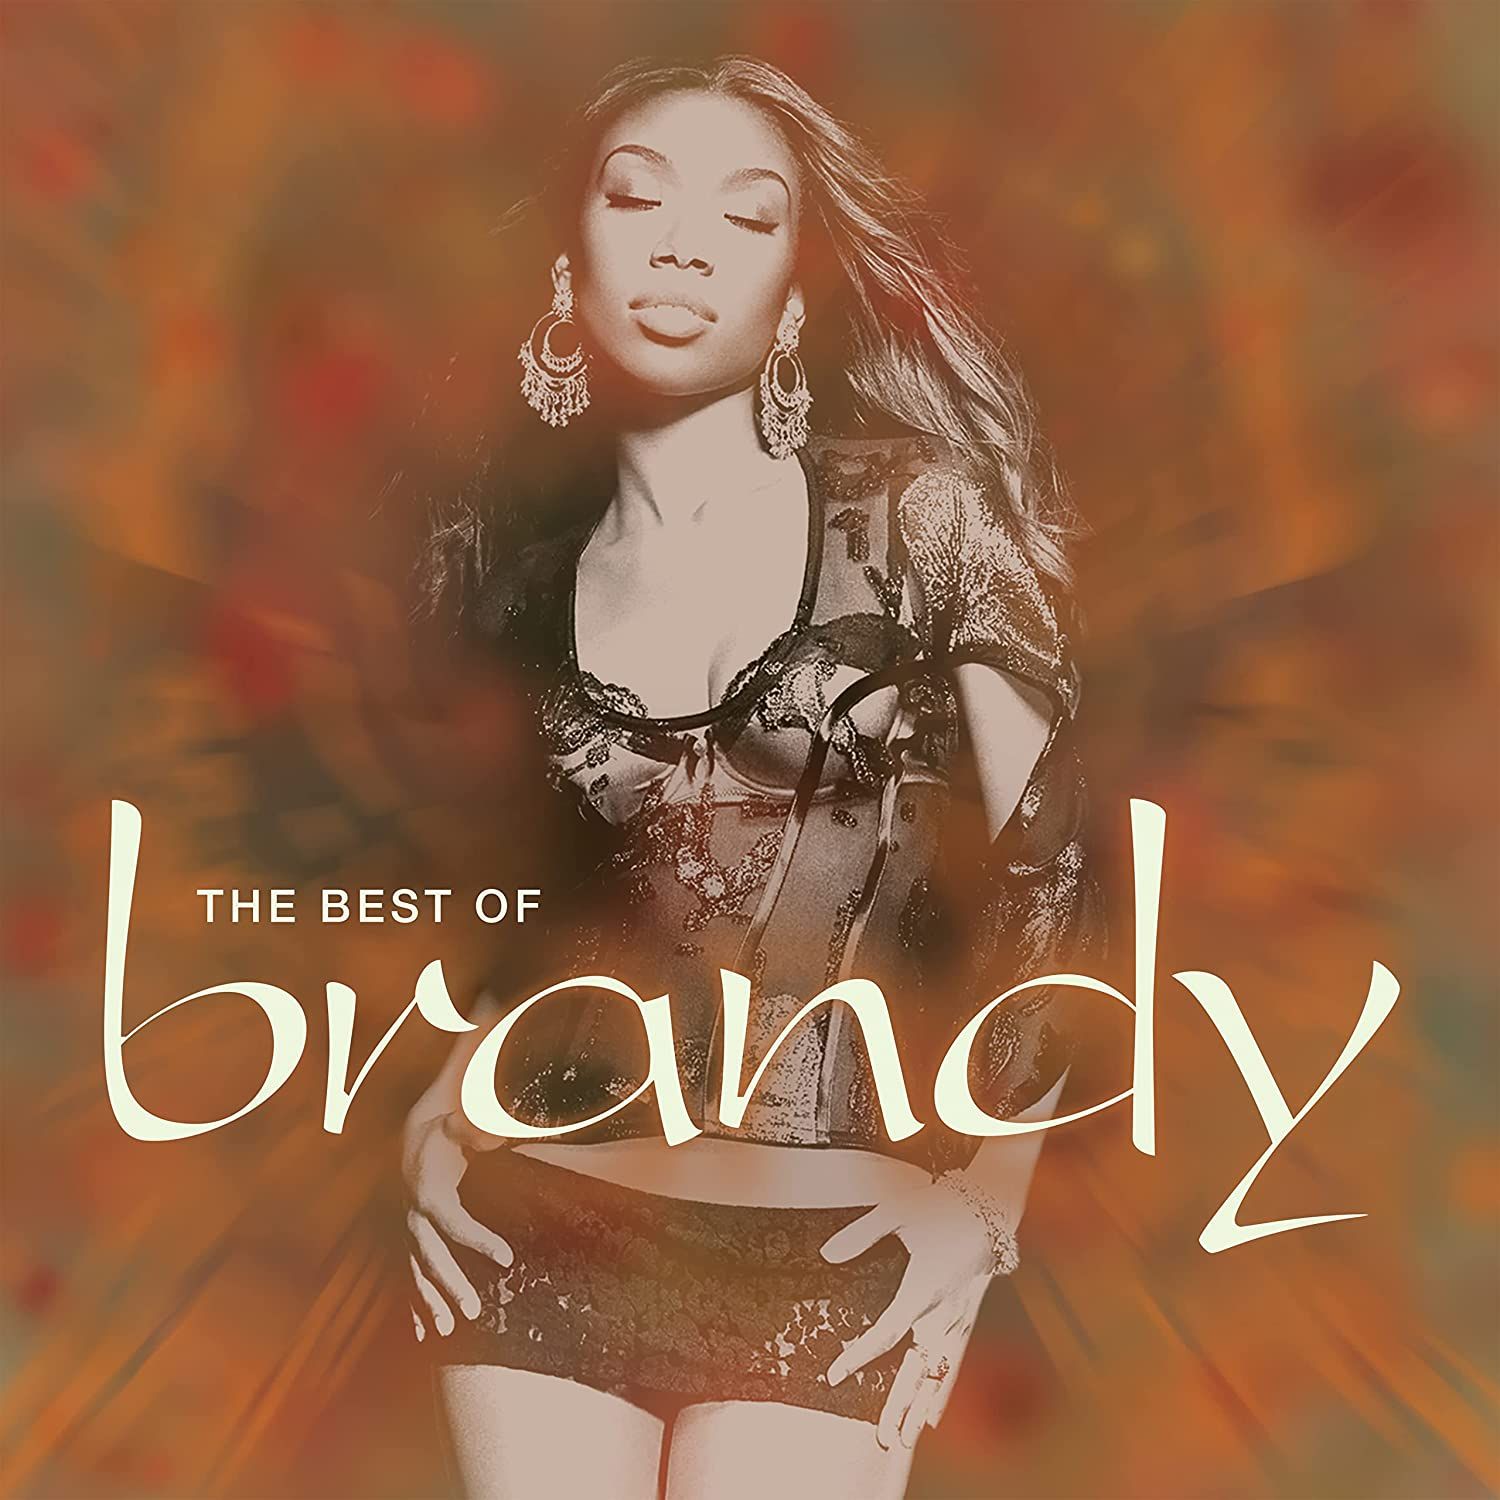 THE BEST OF BRANDY - 2 LP COLORED FRUIT PUNCH VINYL LTD. ED.